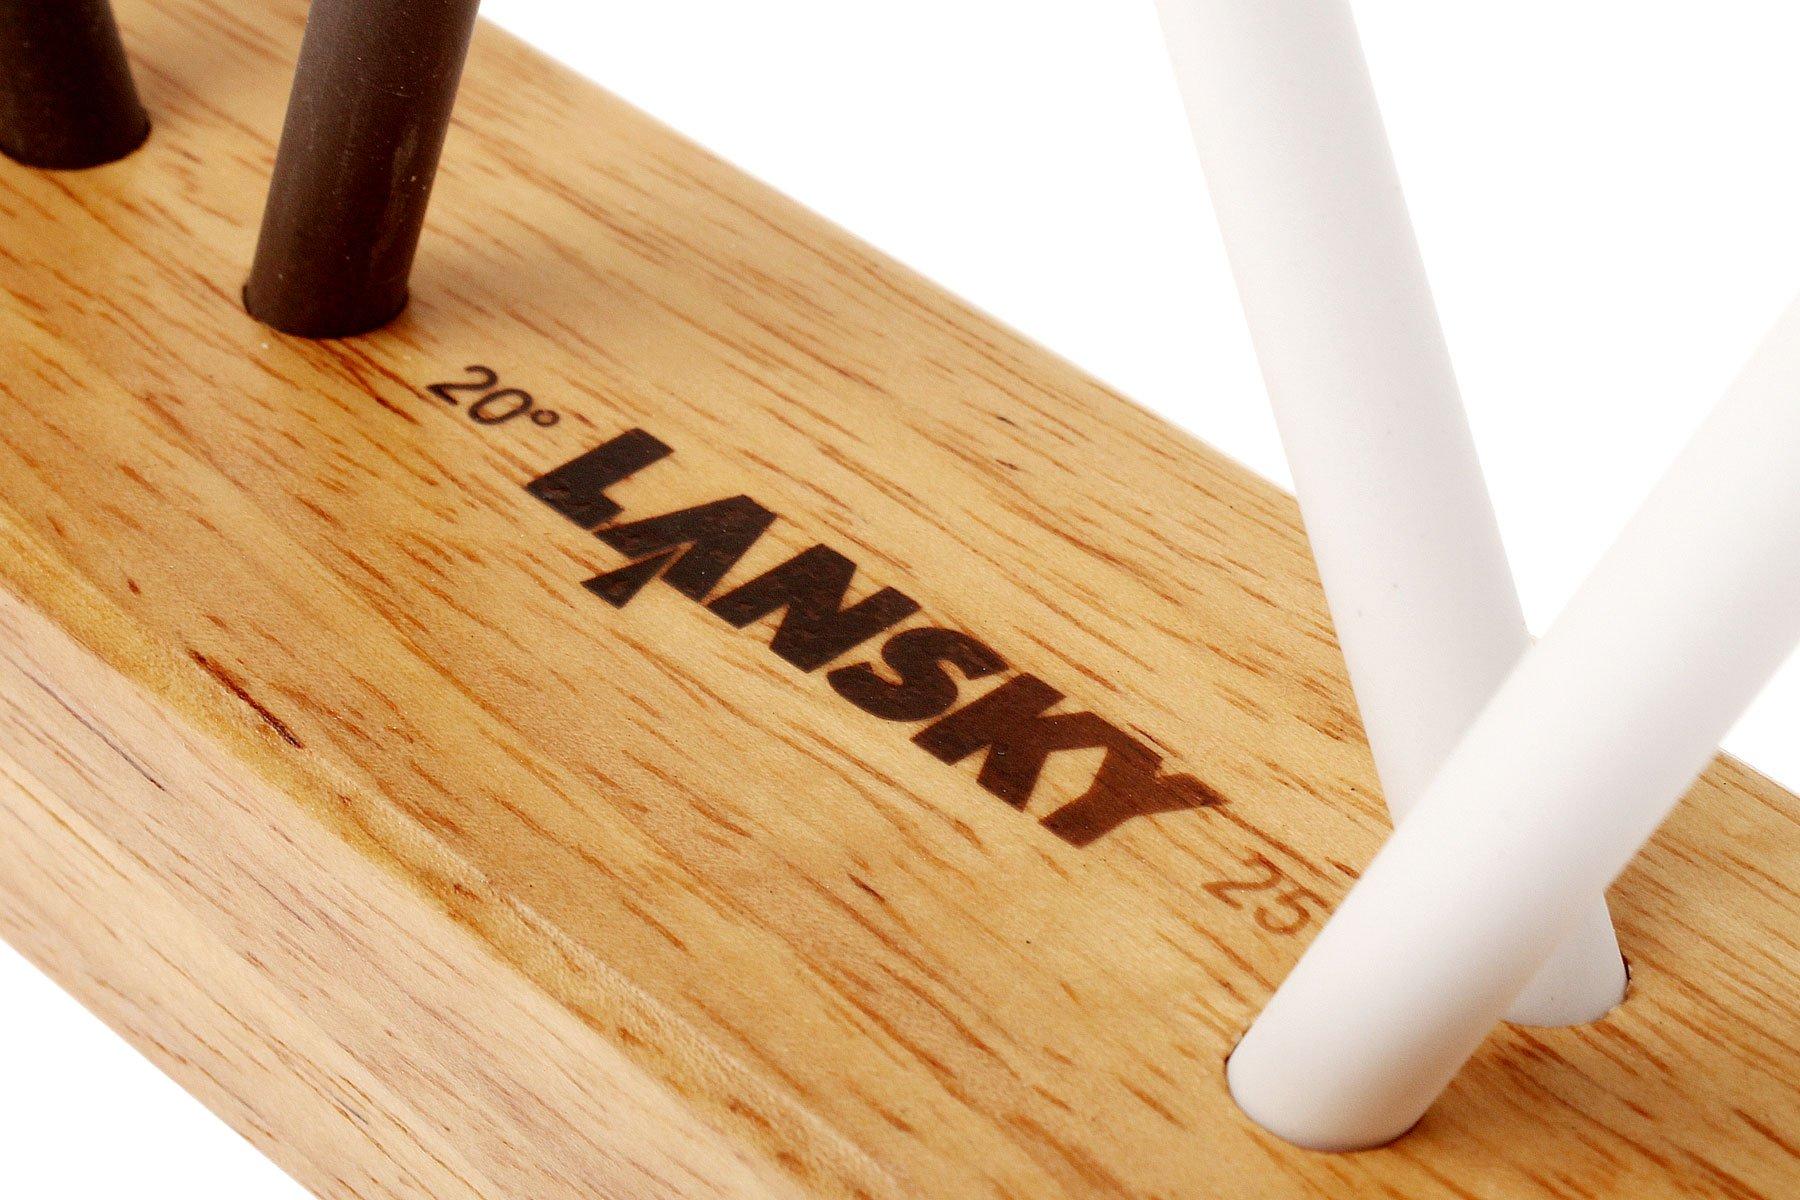 Lansky Turn-Box Knife Sharpener (2023) - Airsoftzone